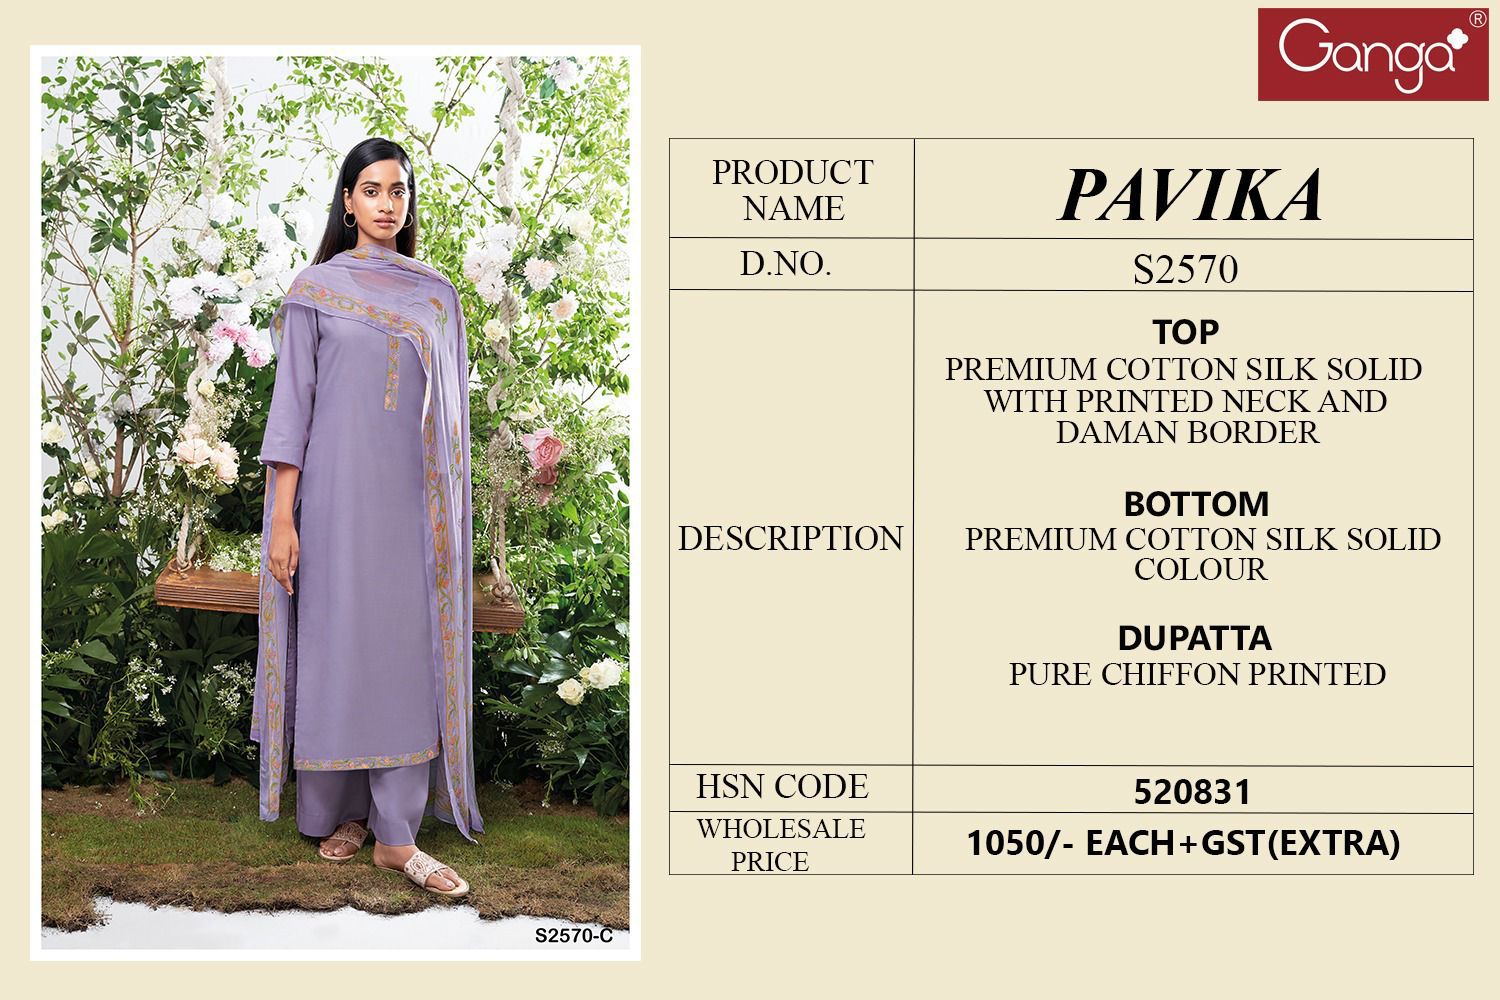 Pavika-2570 Ganga Premium Cotton Plazzo Style Suits